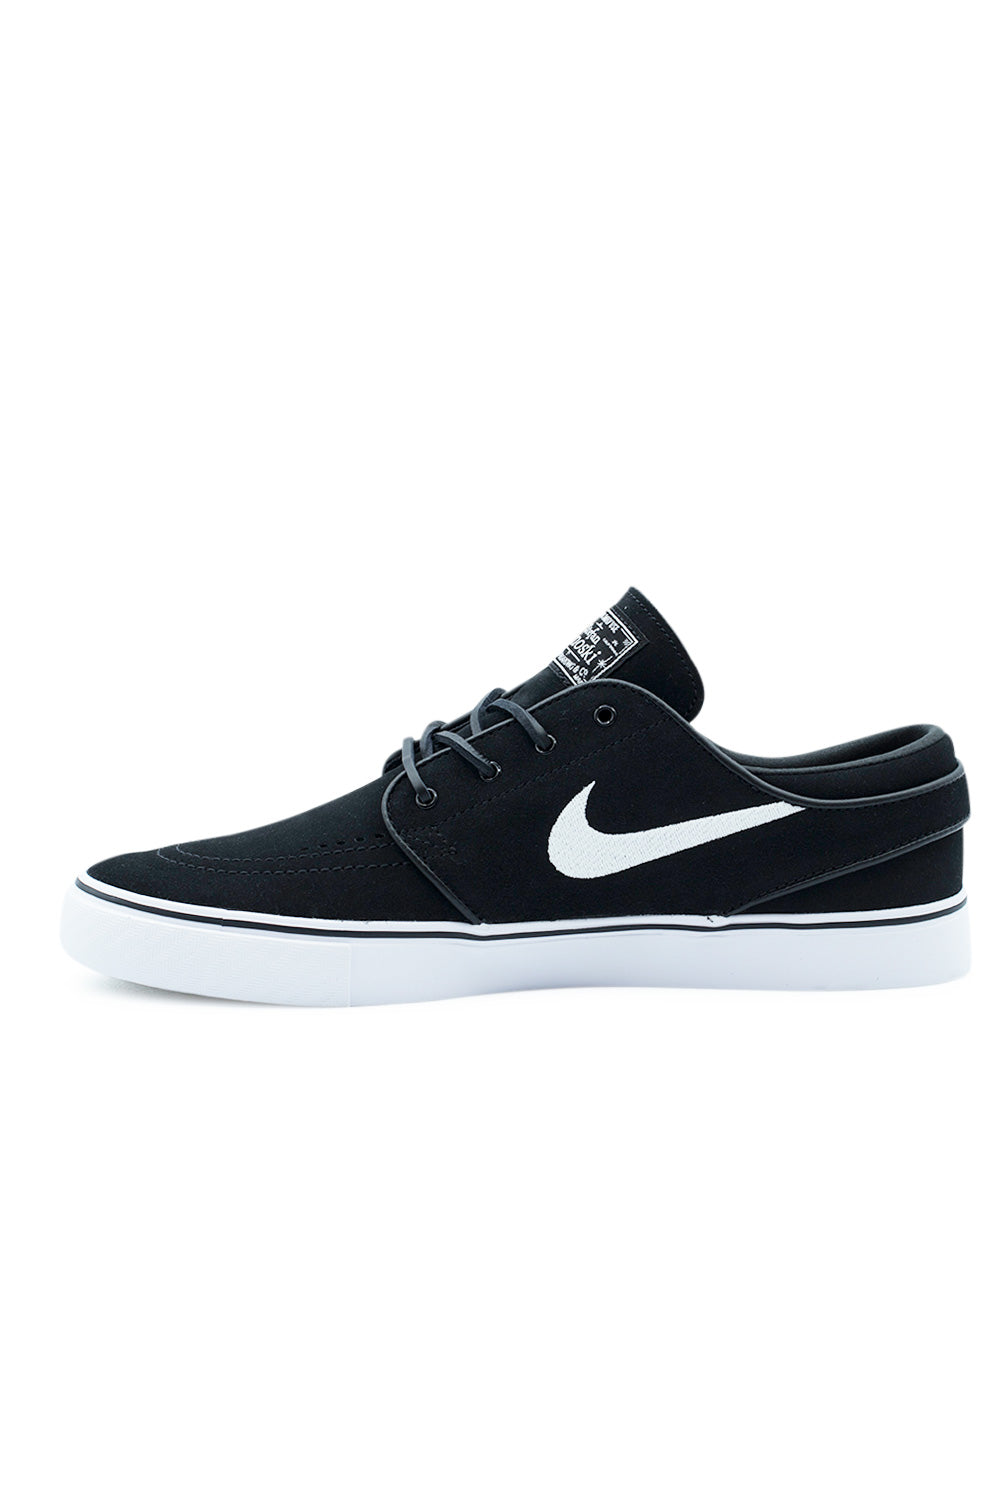 Nike SB Zoom Janoski OG+ Shoe Black / White / Black / White - BONKERS